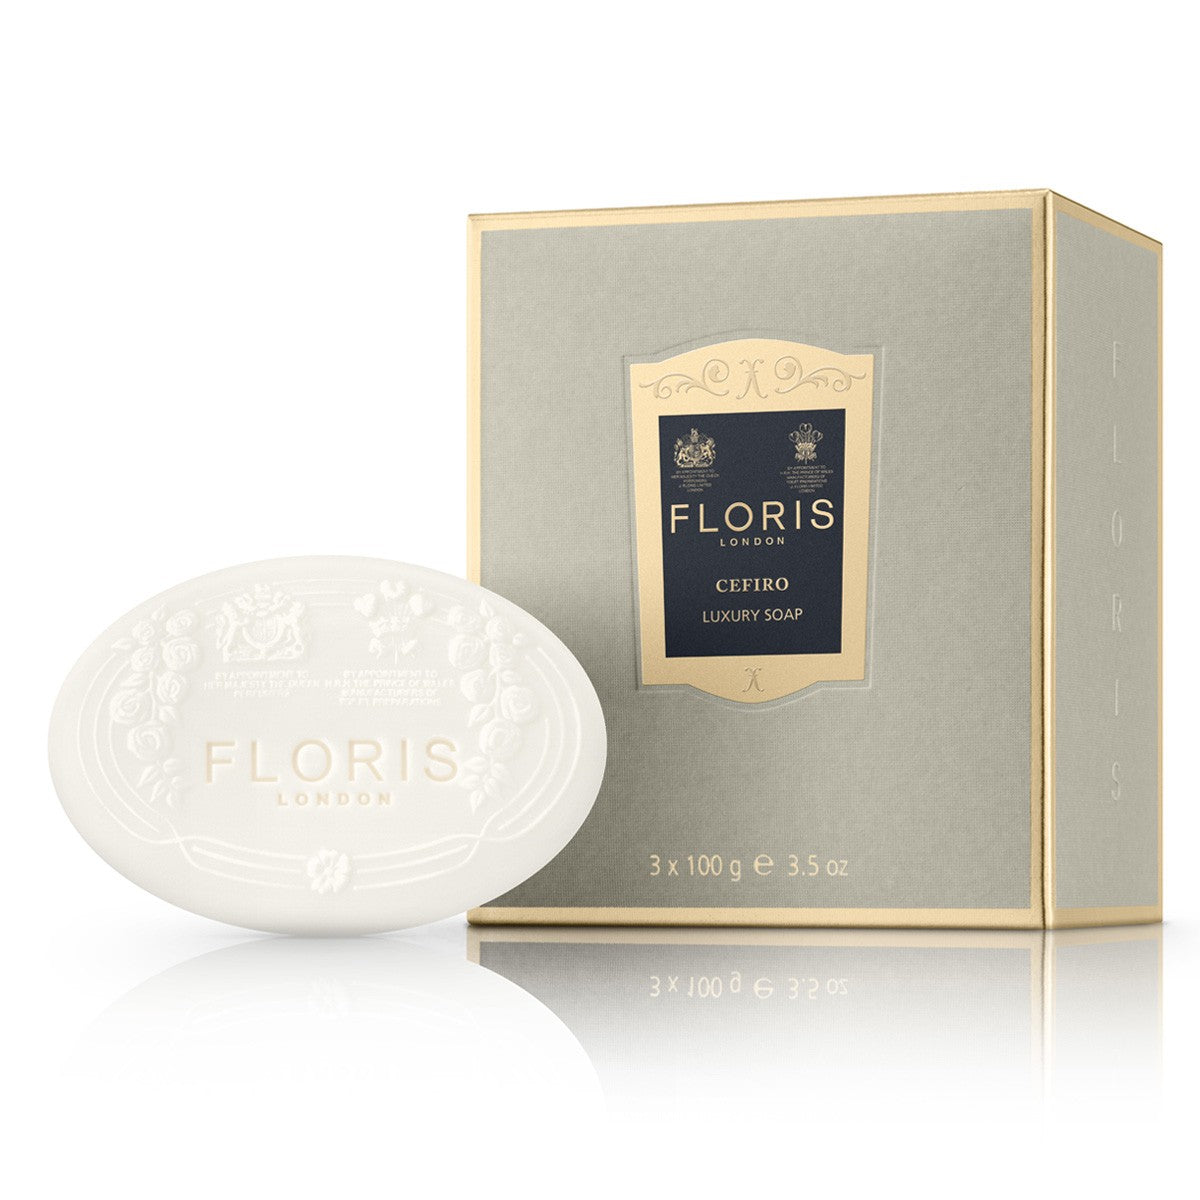 Triple-milled FLORIS Cefiro Luxury Soap by KirbyAllison.com.